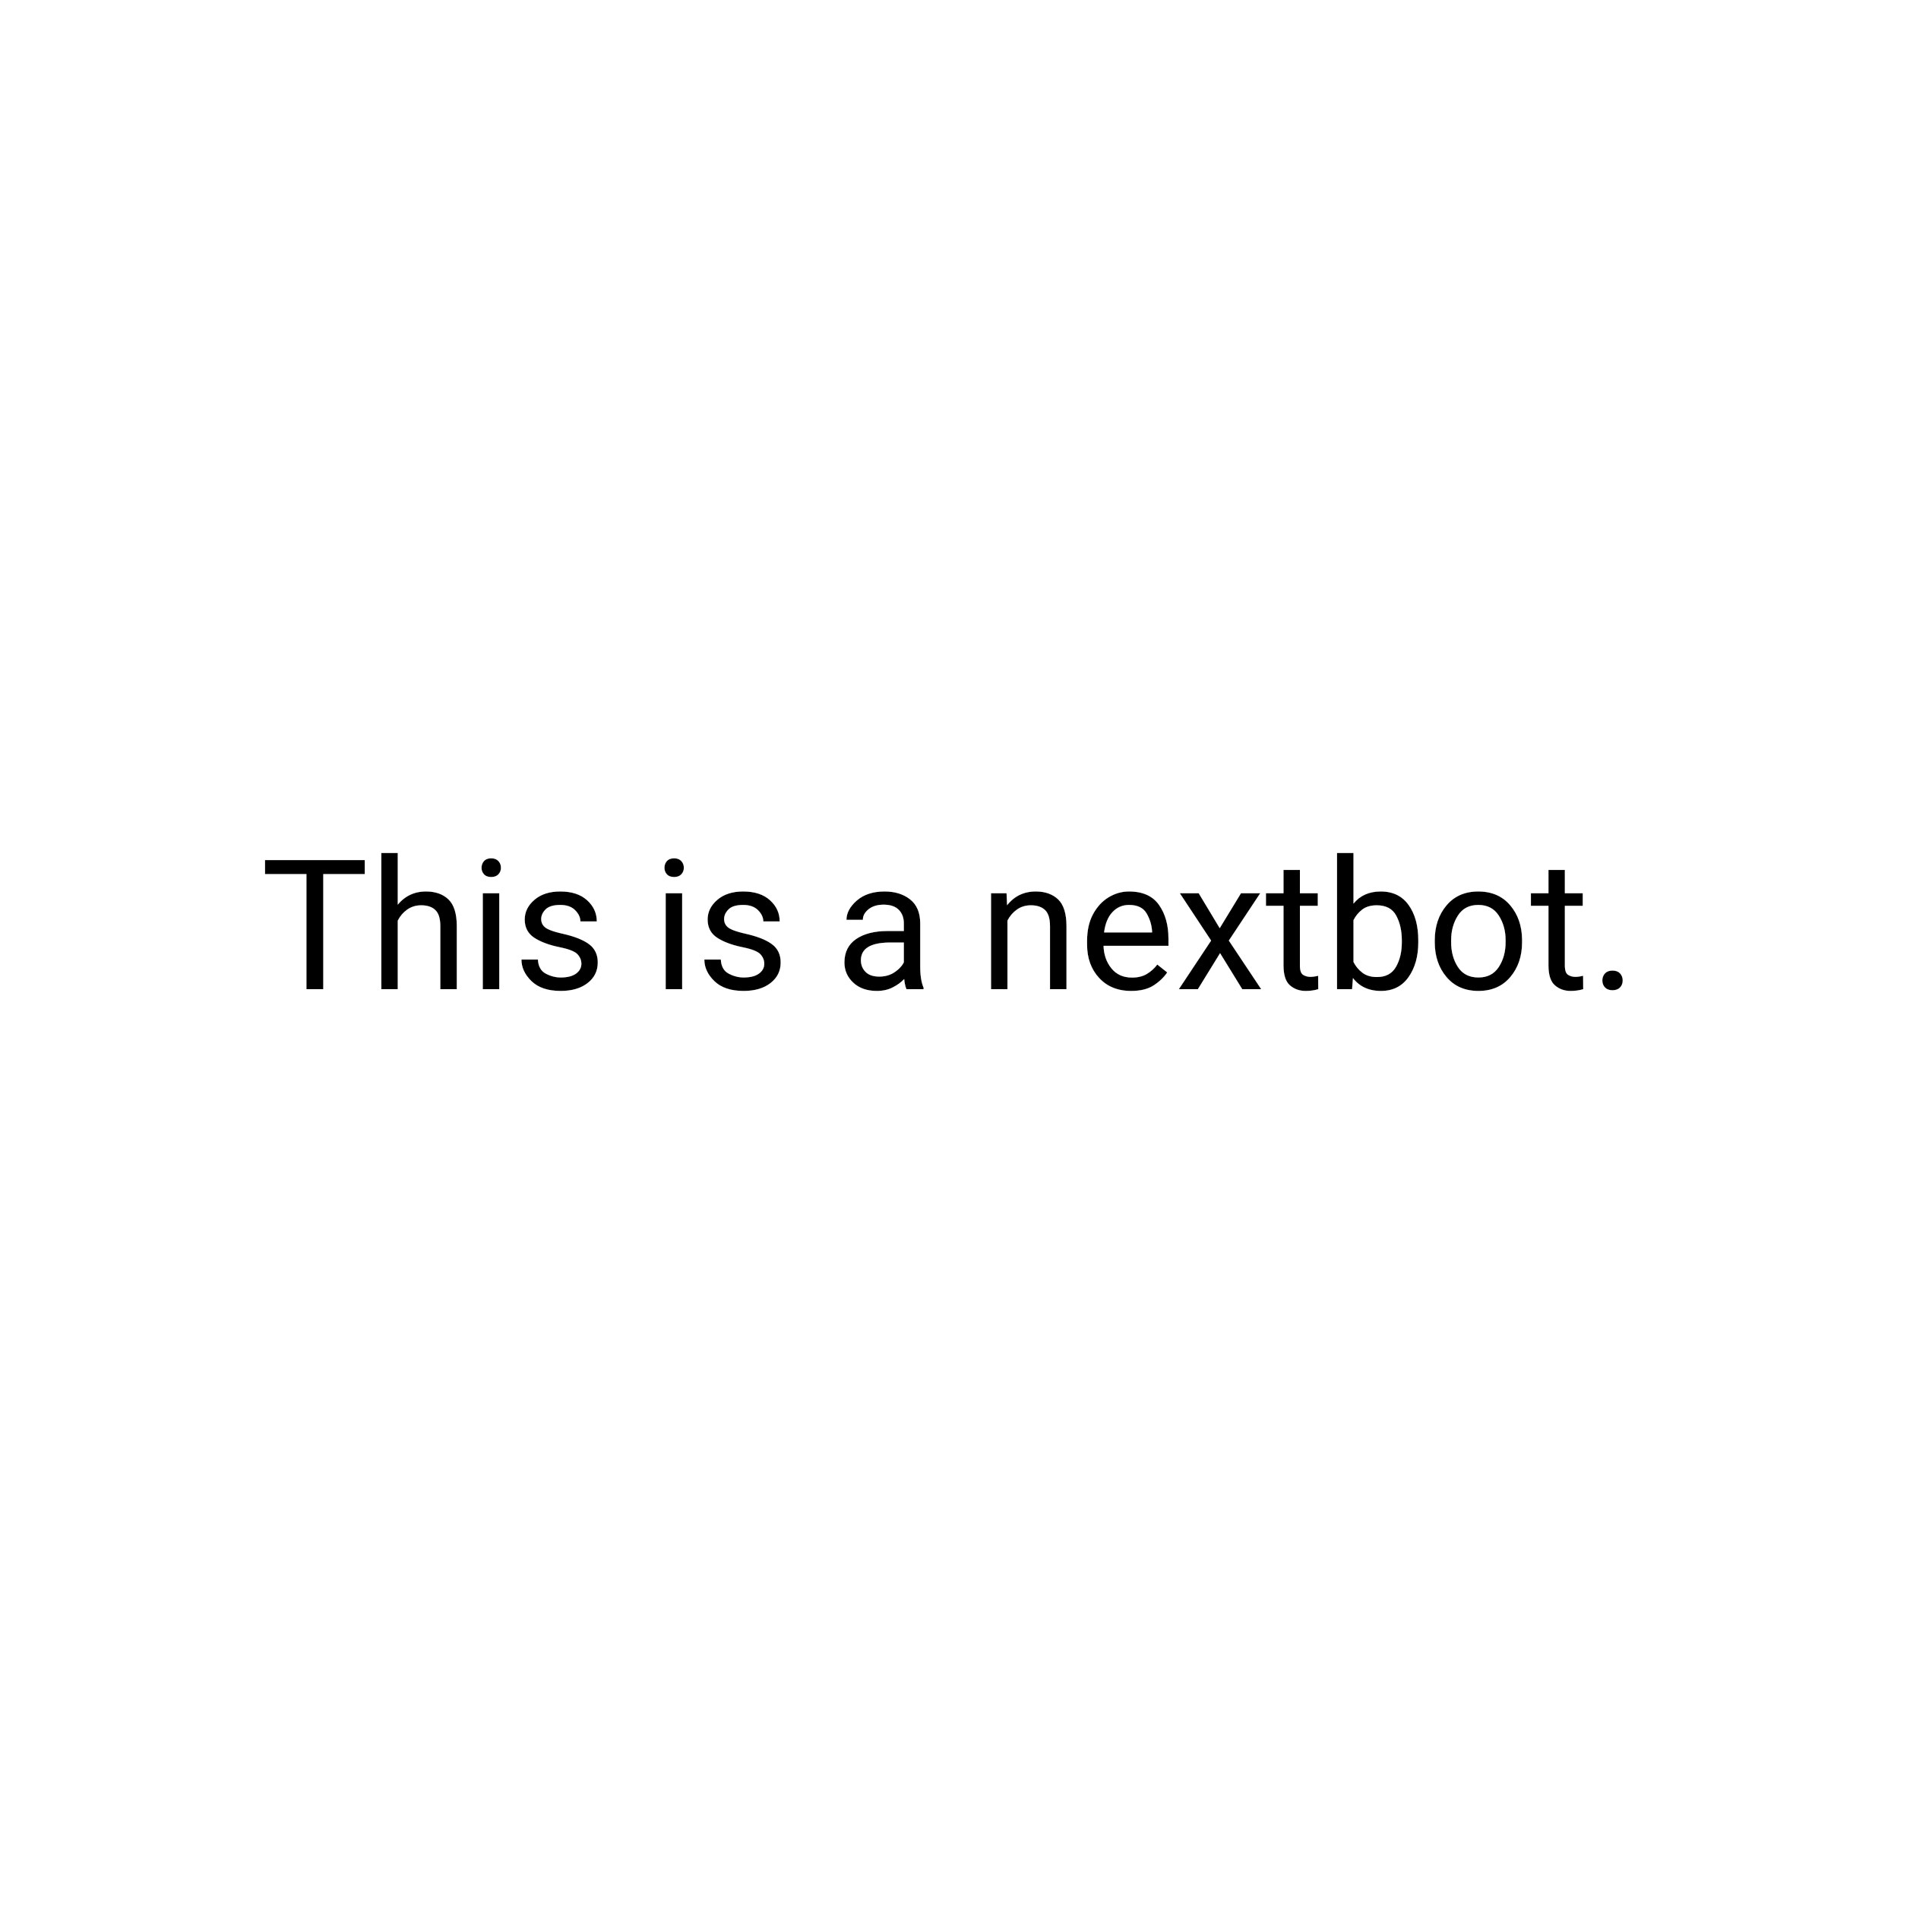 Making Evolution of Nico's Nextbots logo Part 6 (Christmas Nico's Nextbots)  